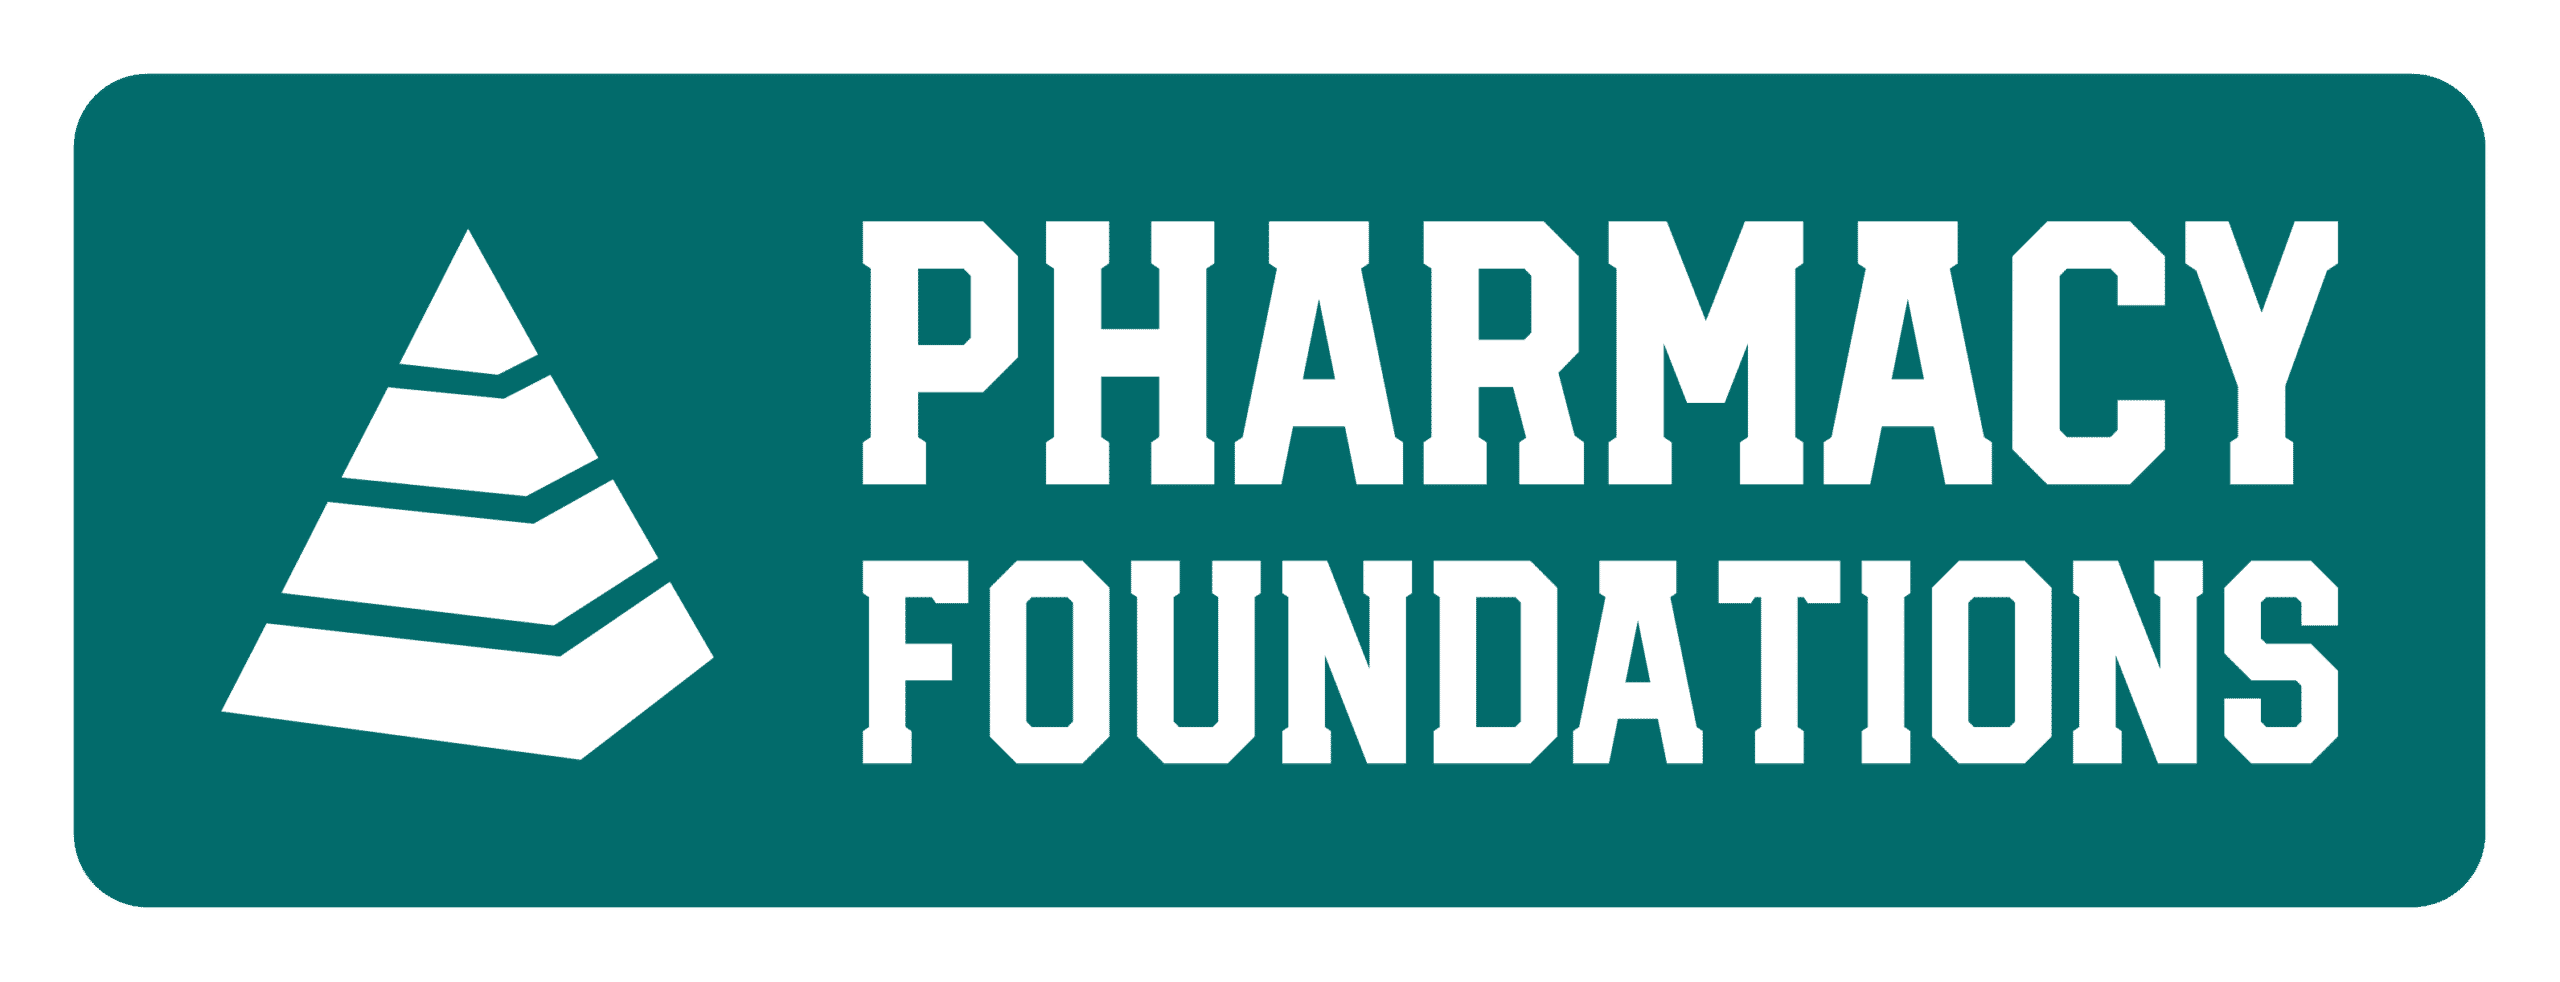 Pharmacy Foundations